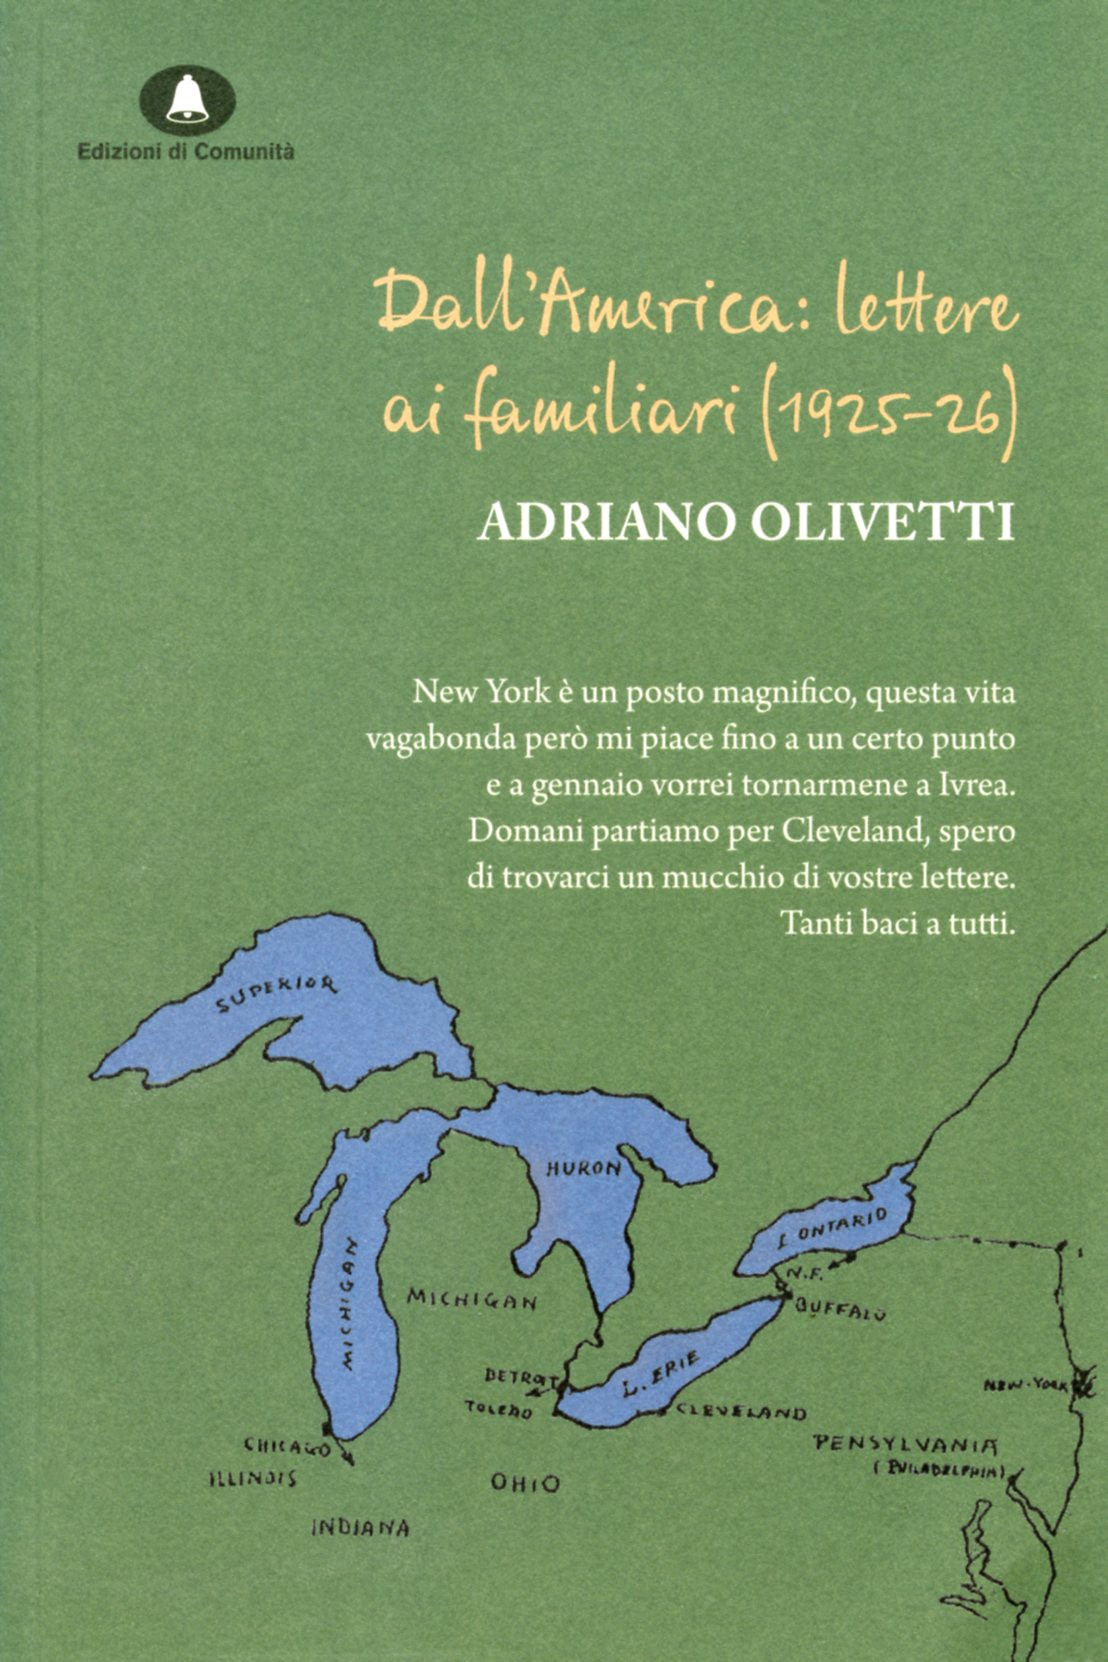 “Dall’America: lettere ai familiari (1925-26)” (“From America: Letters to Family Members (1925–26)”)